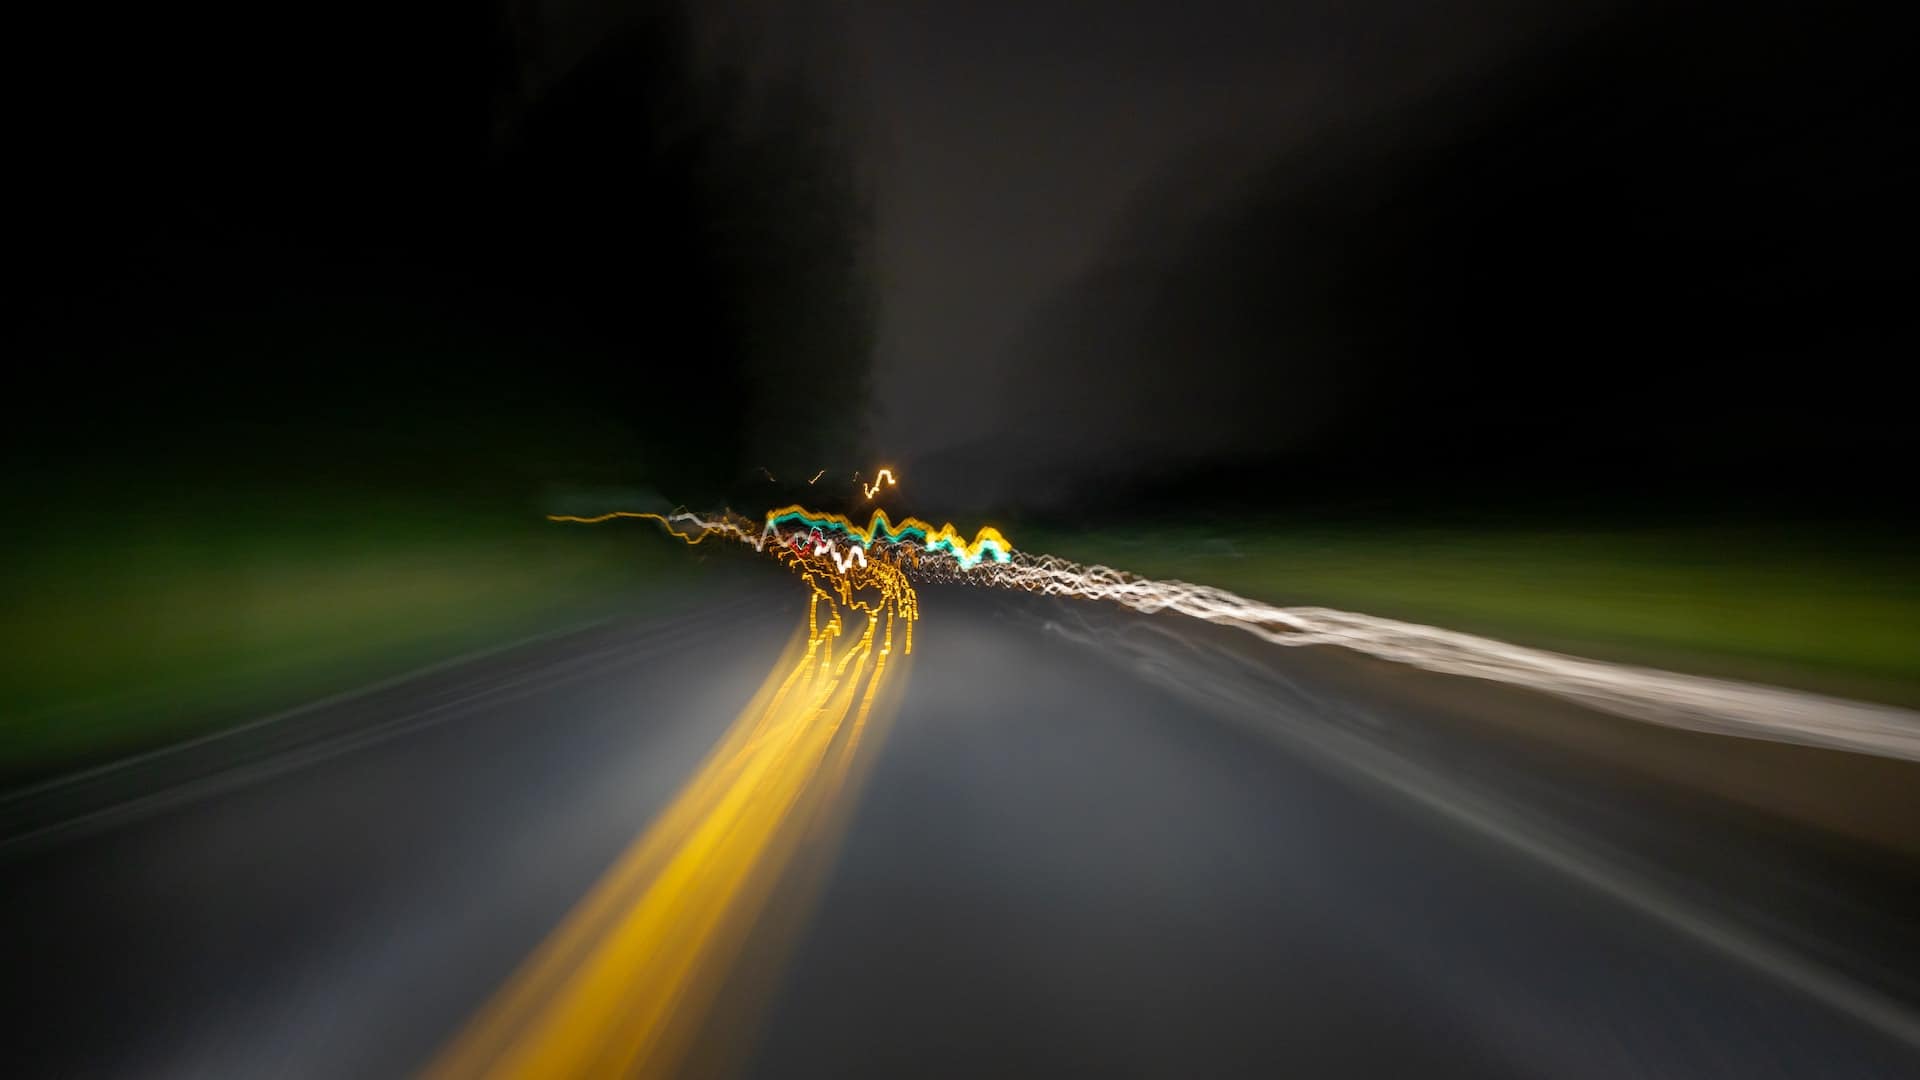 Blurry highway image